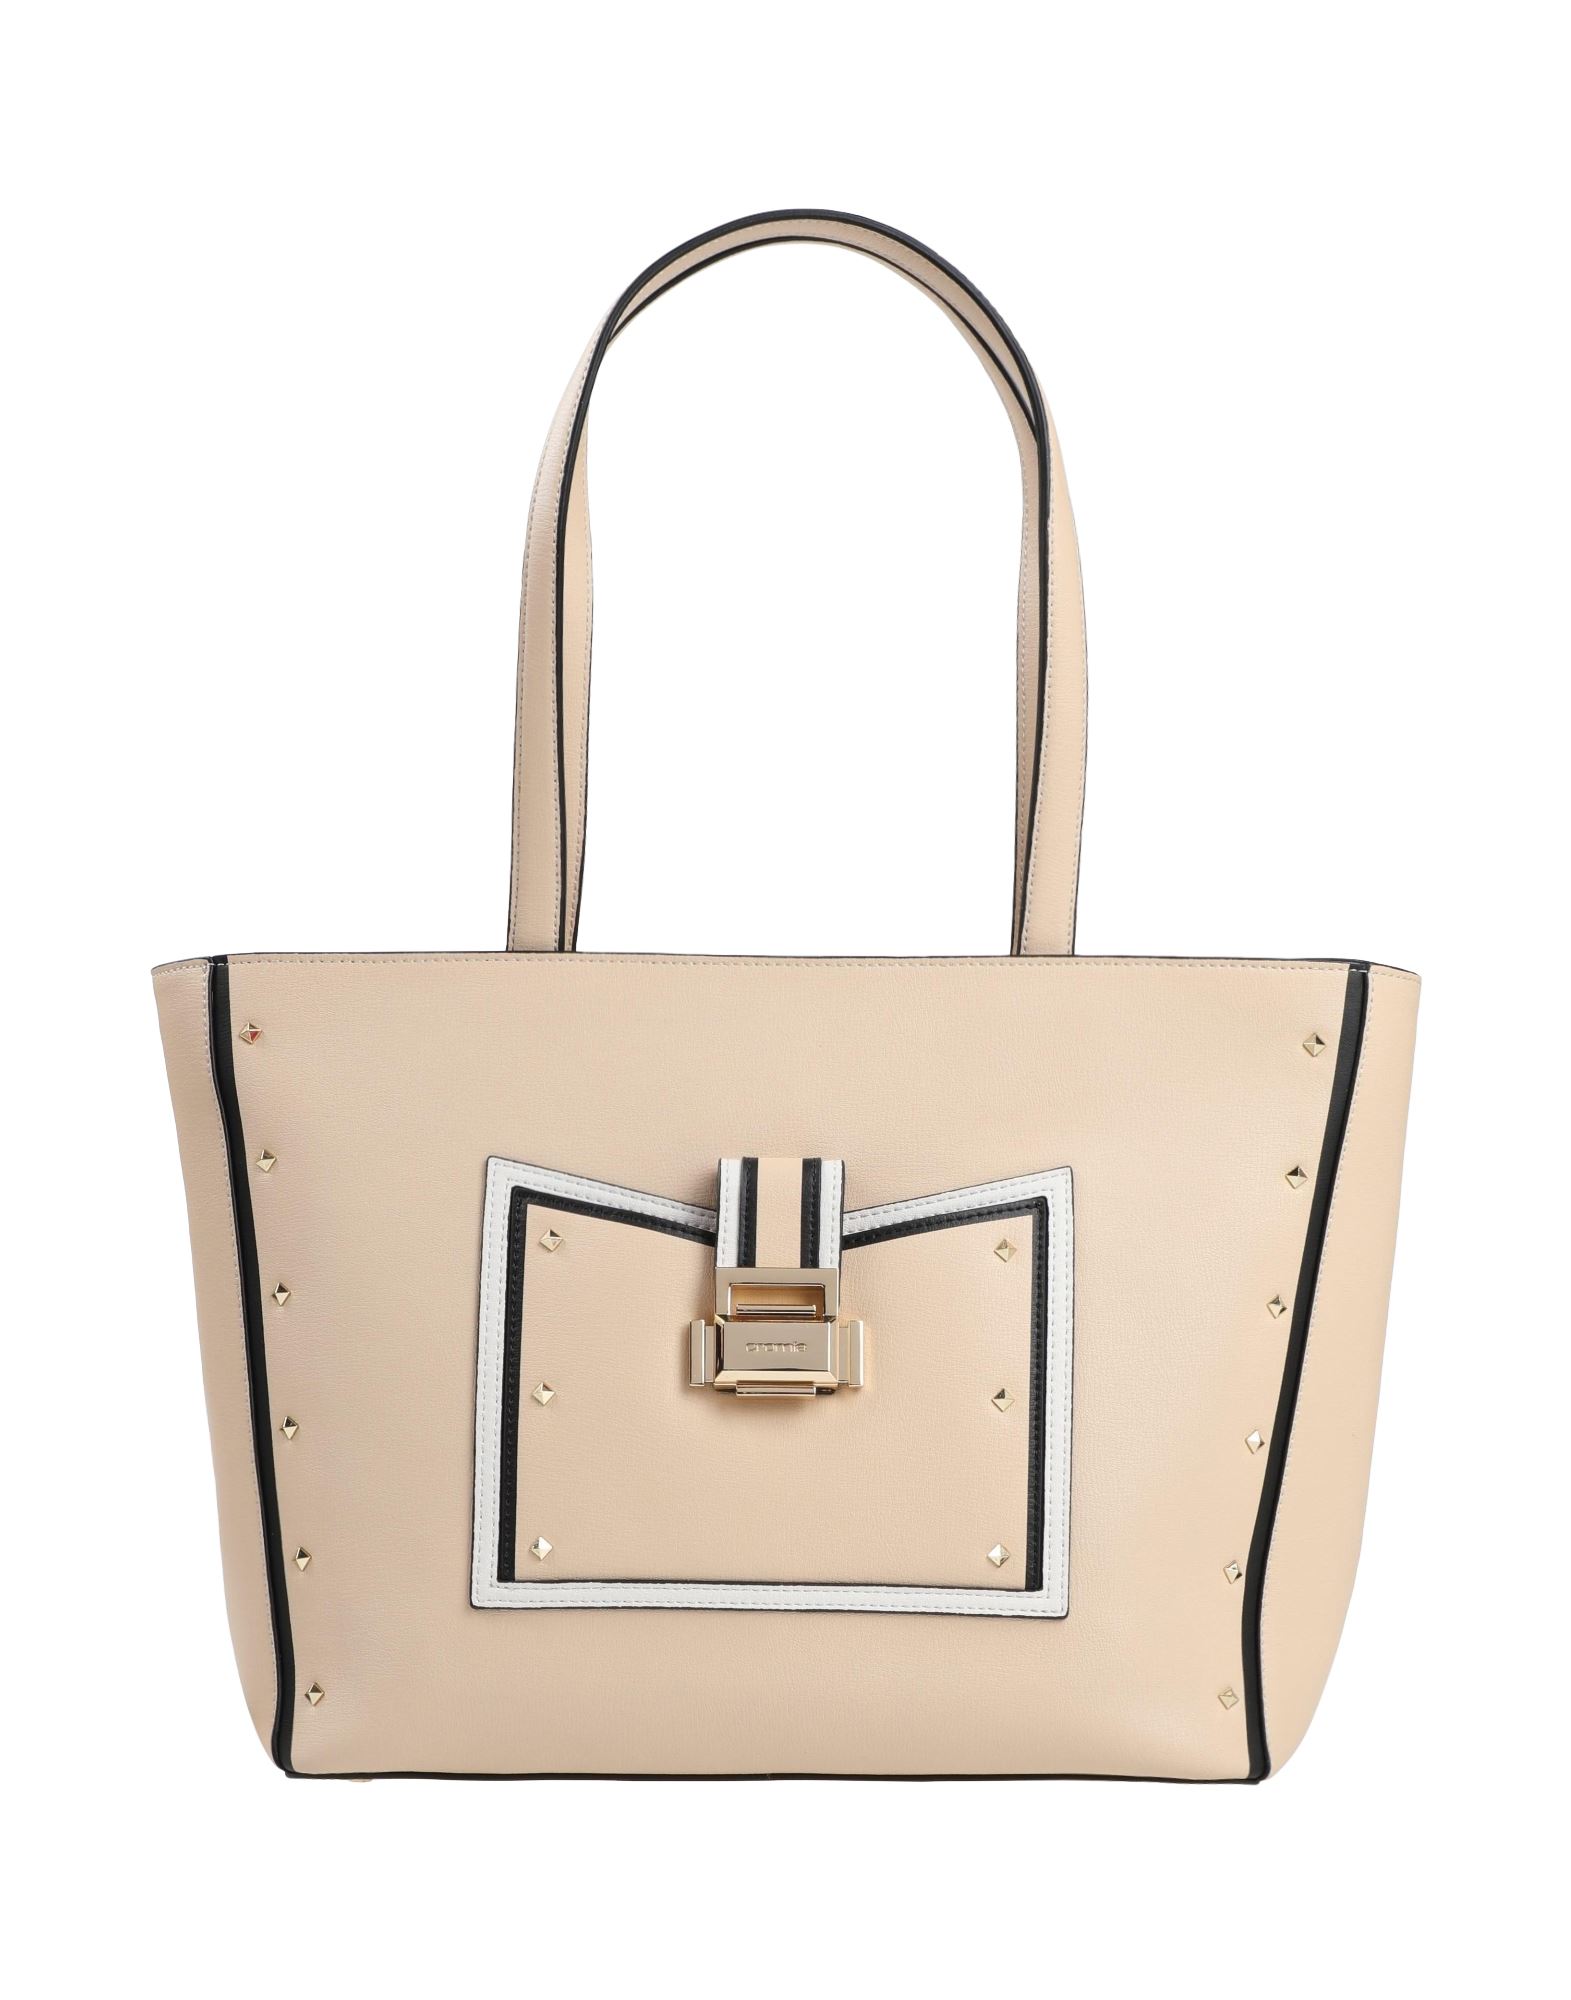 CROMIA Handbags - Item 45552350